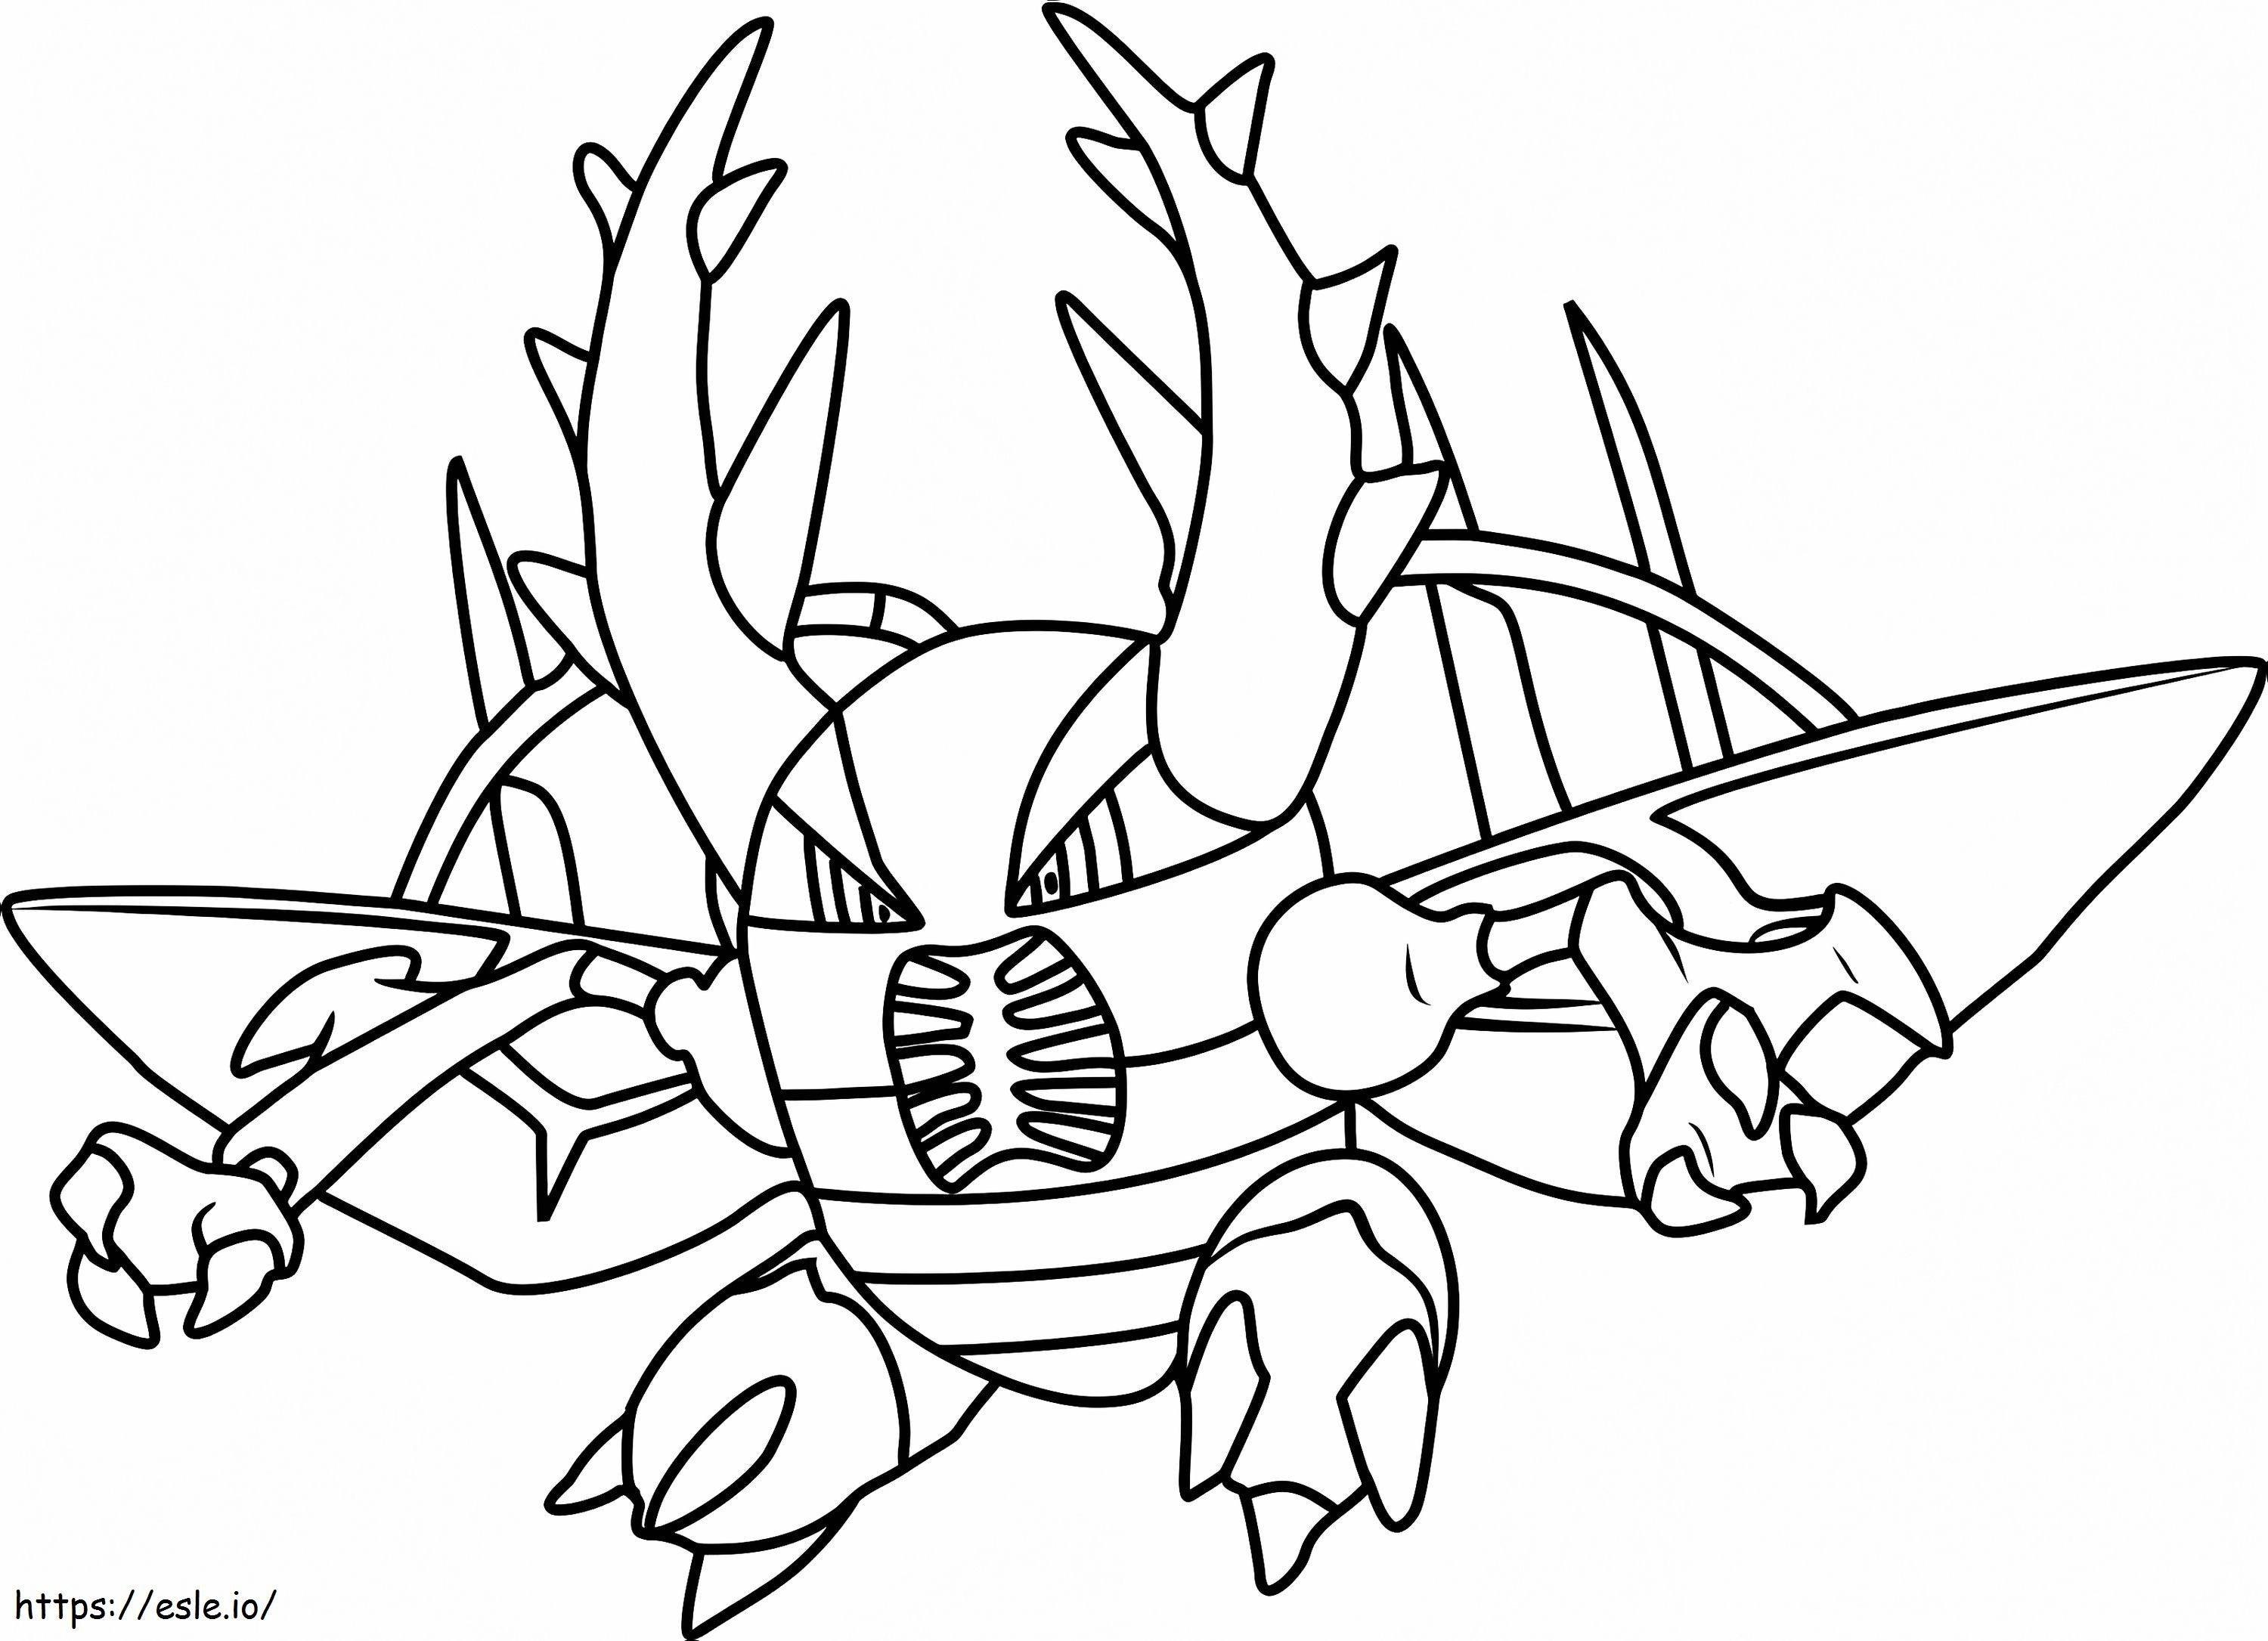 Coloriage 1531101655 Méga Pinsir Pokémon A4 à imprimer dessin